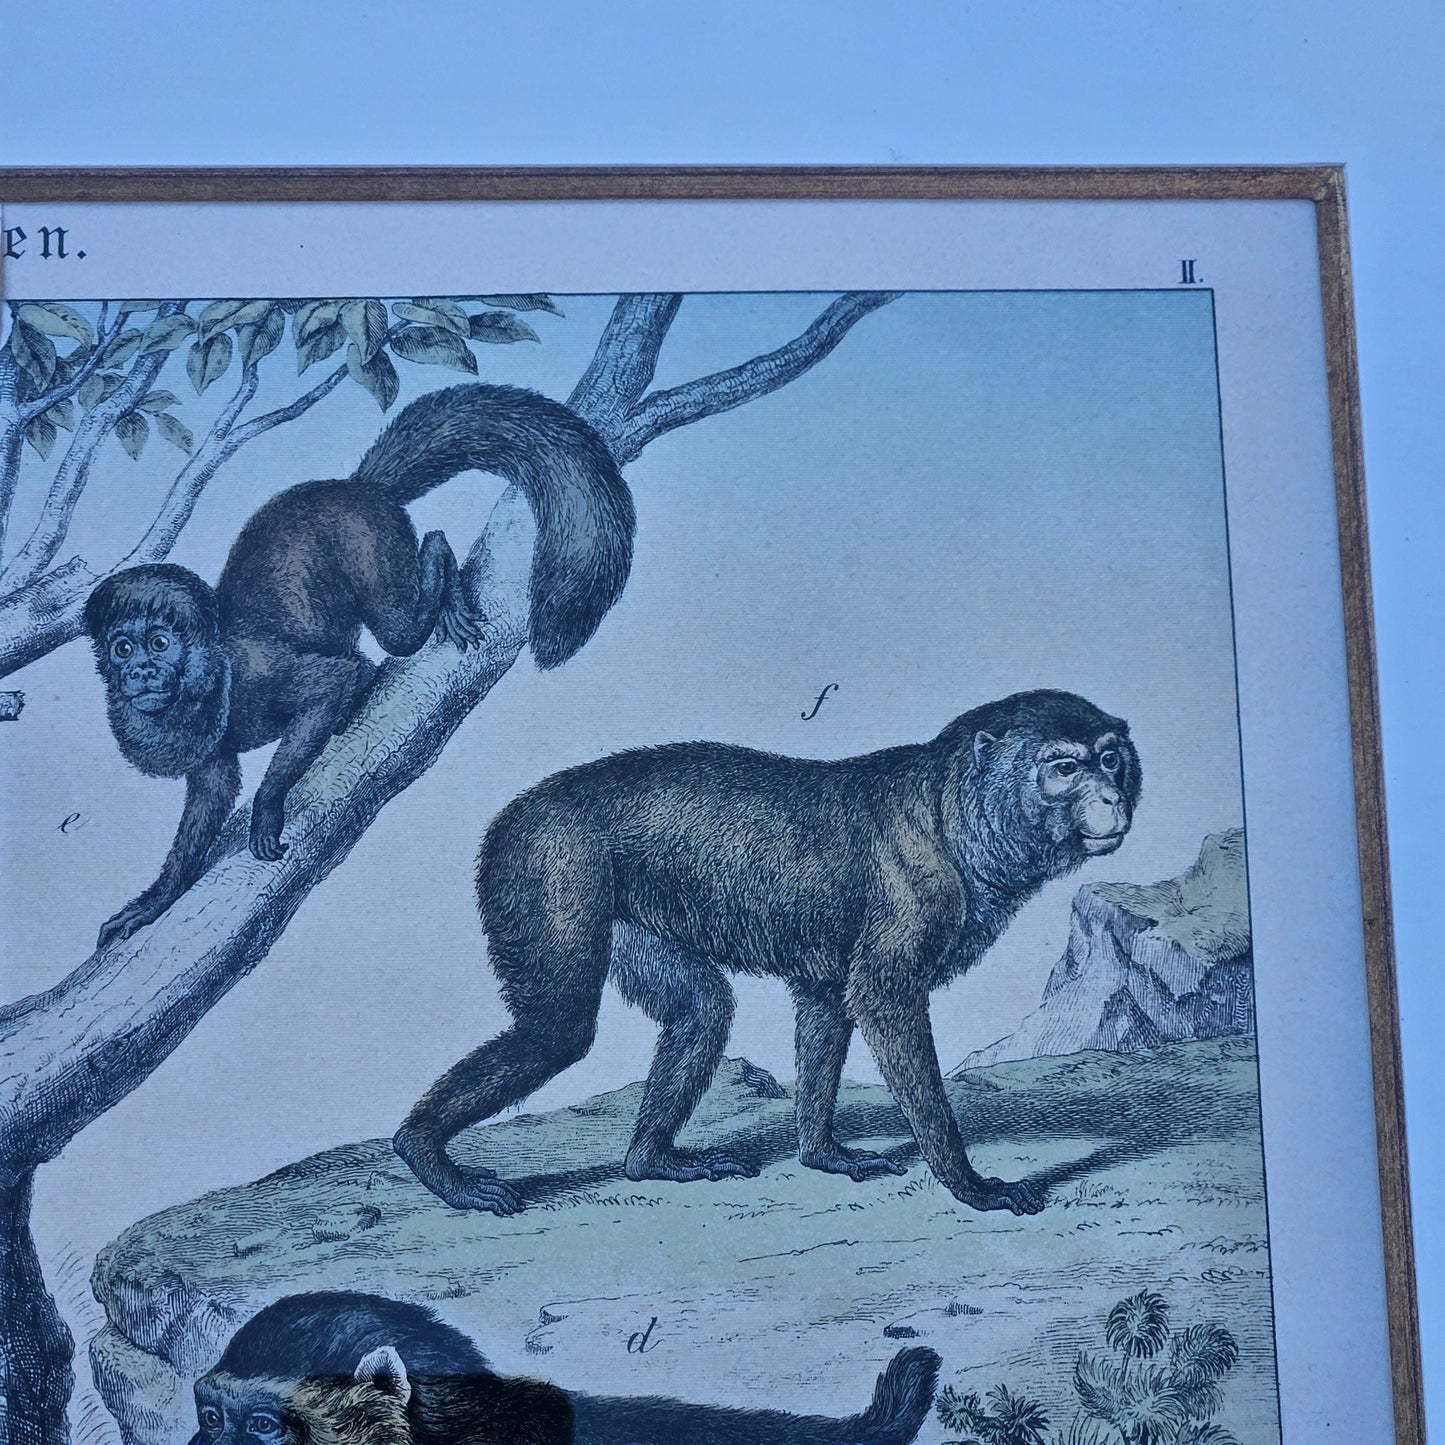 Antique Framed Lithograph of Monkeys & Baboons by GH Schubert